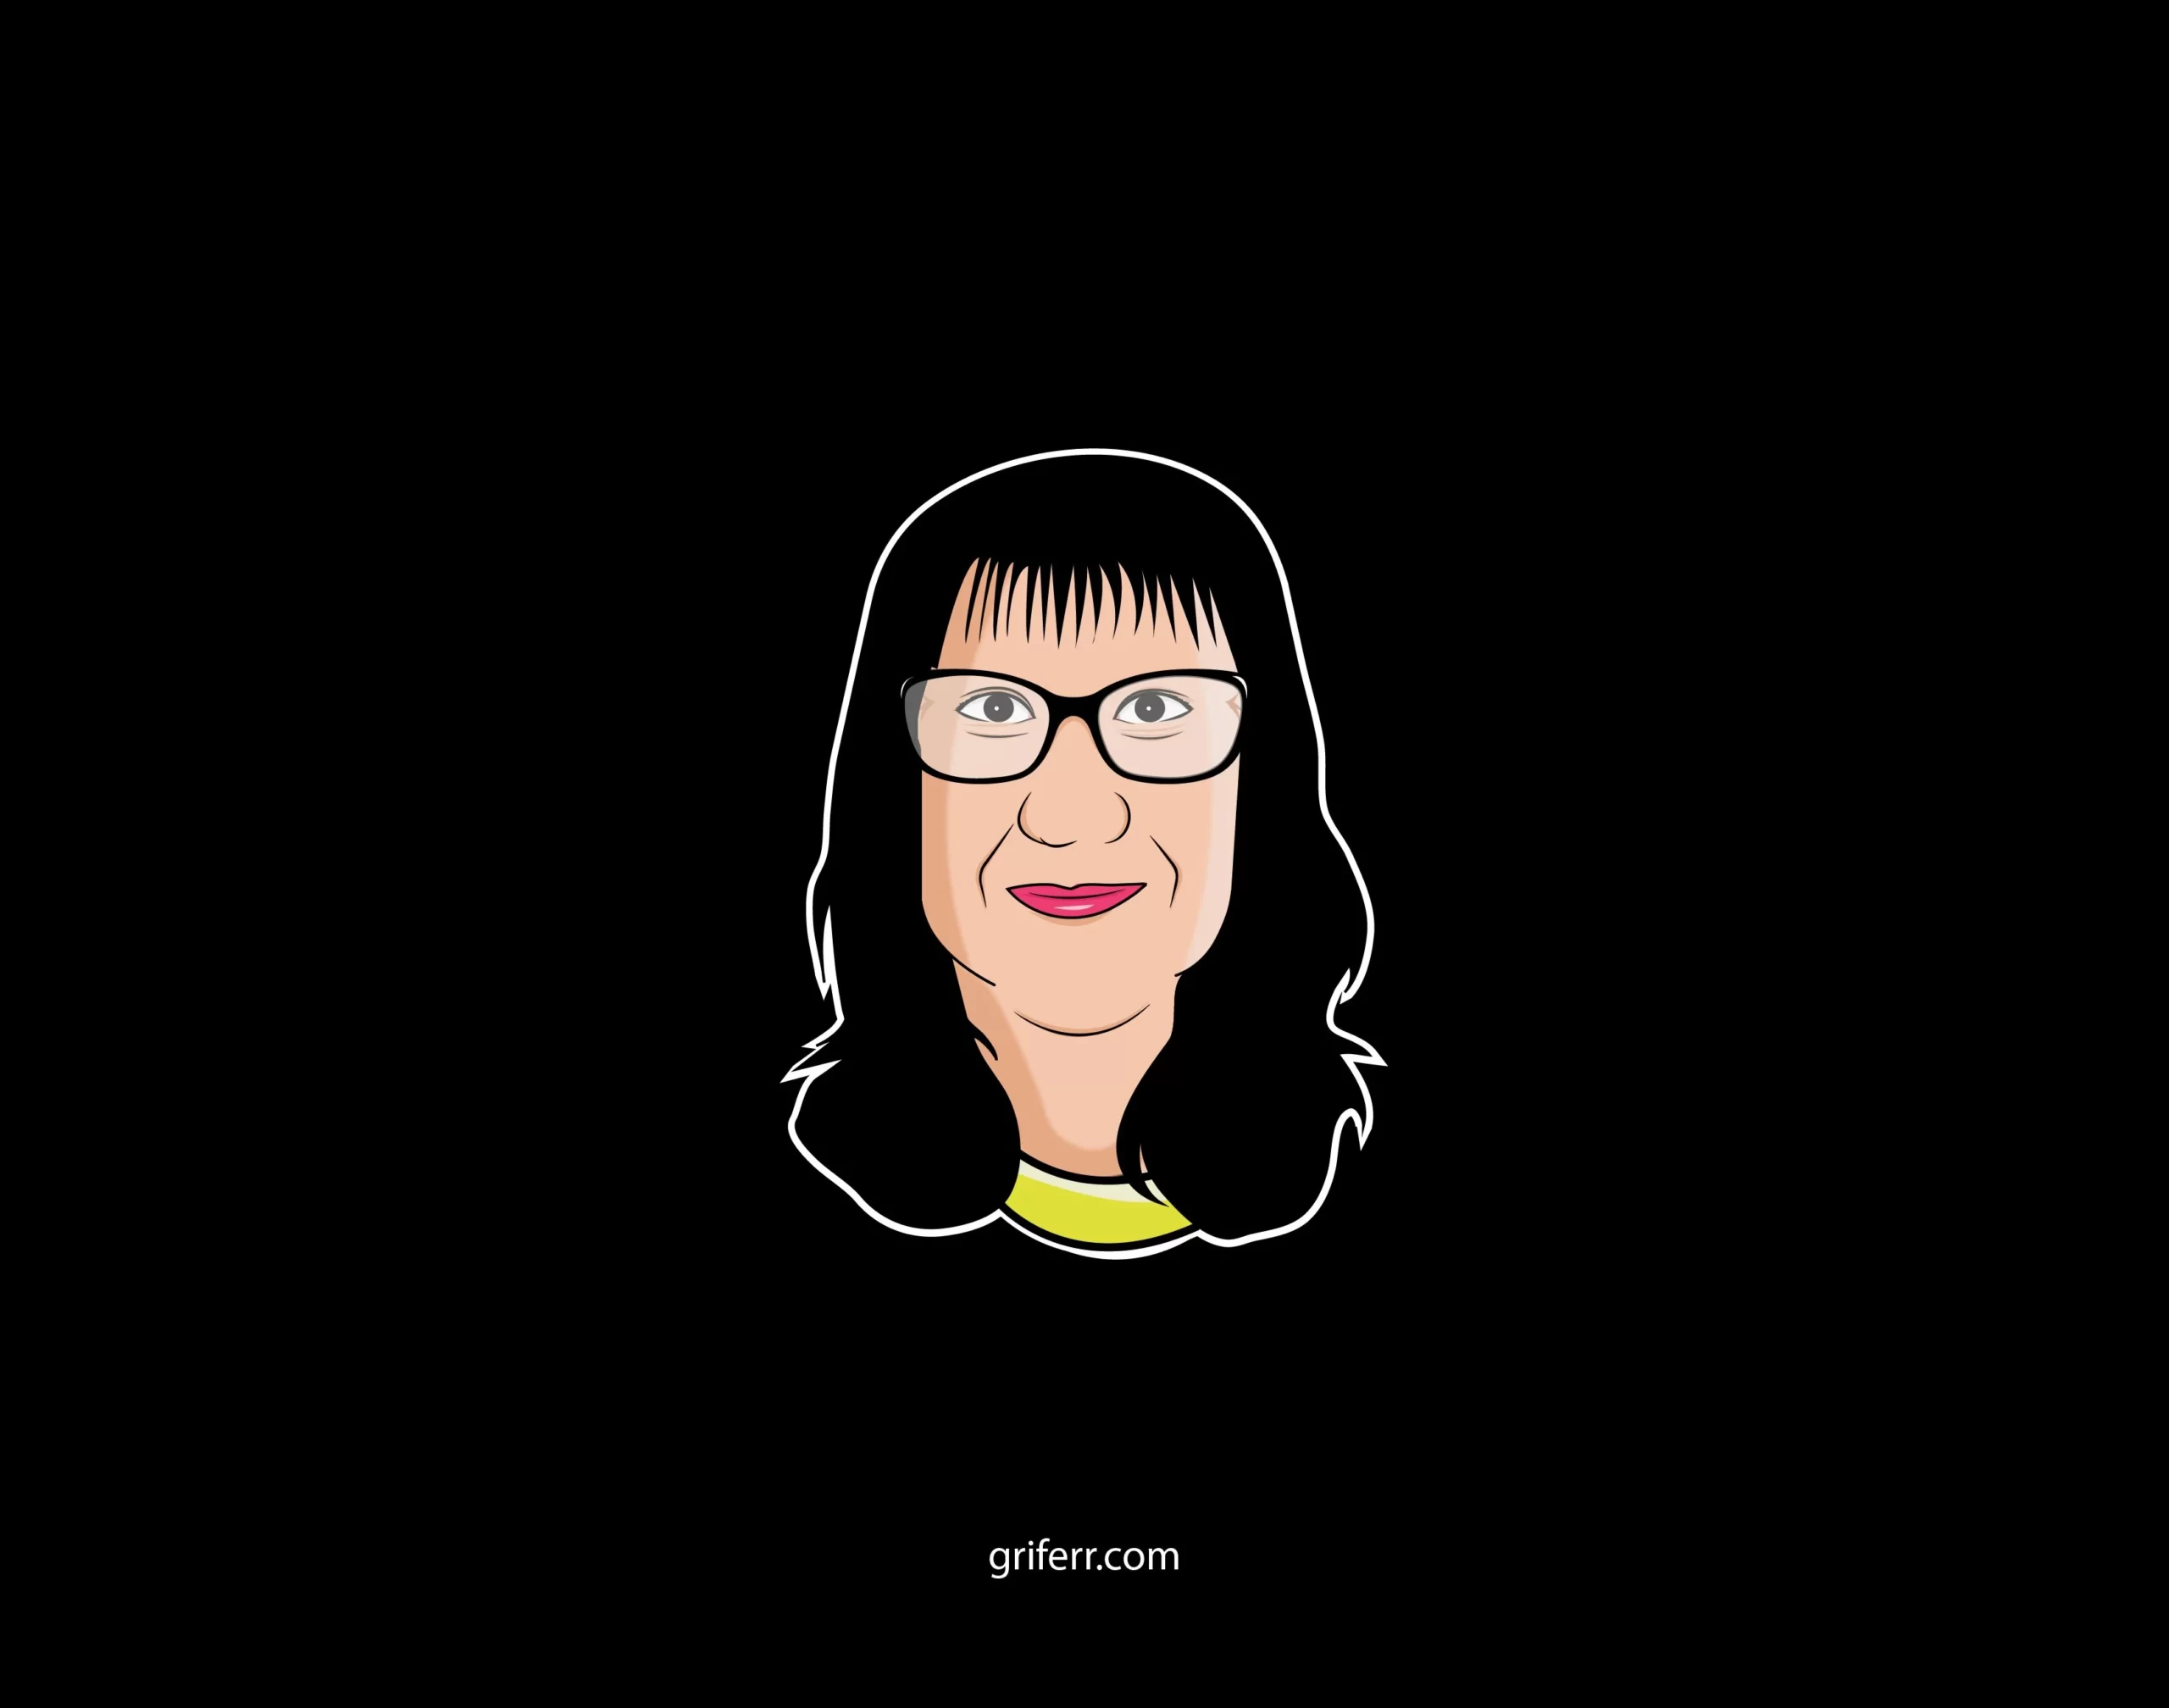 Flat portrait design of a stylish lady wearing glasses against a minimalist background.